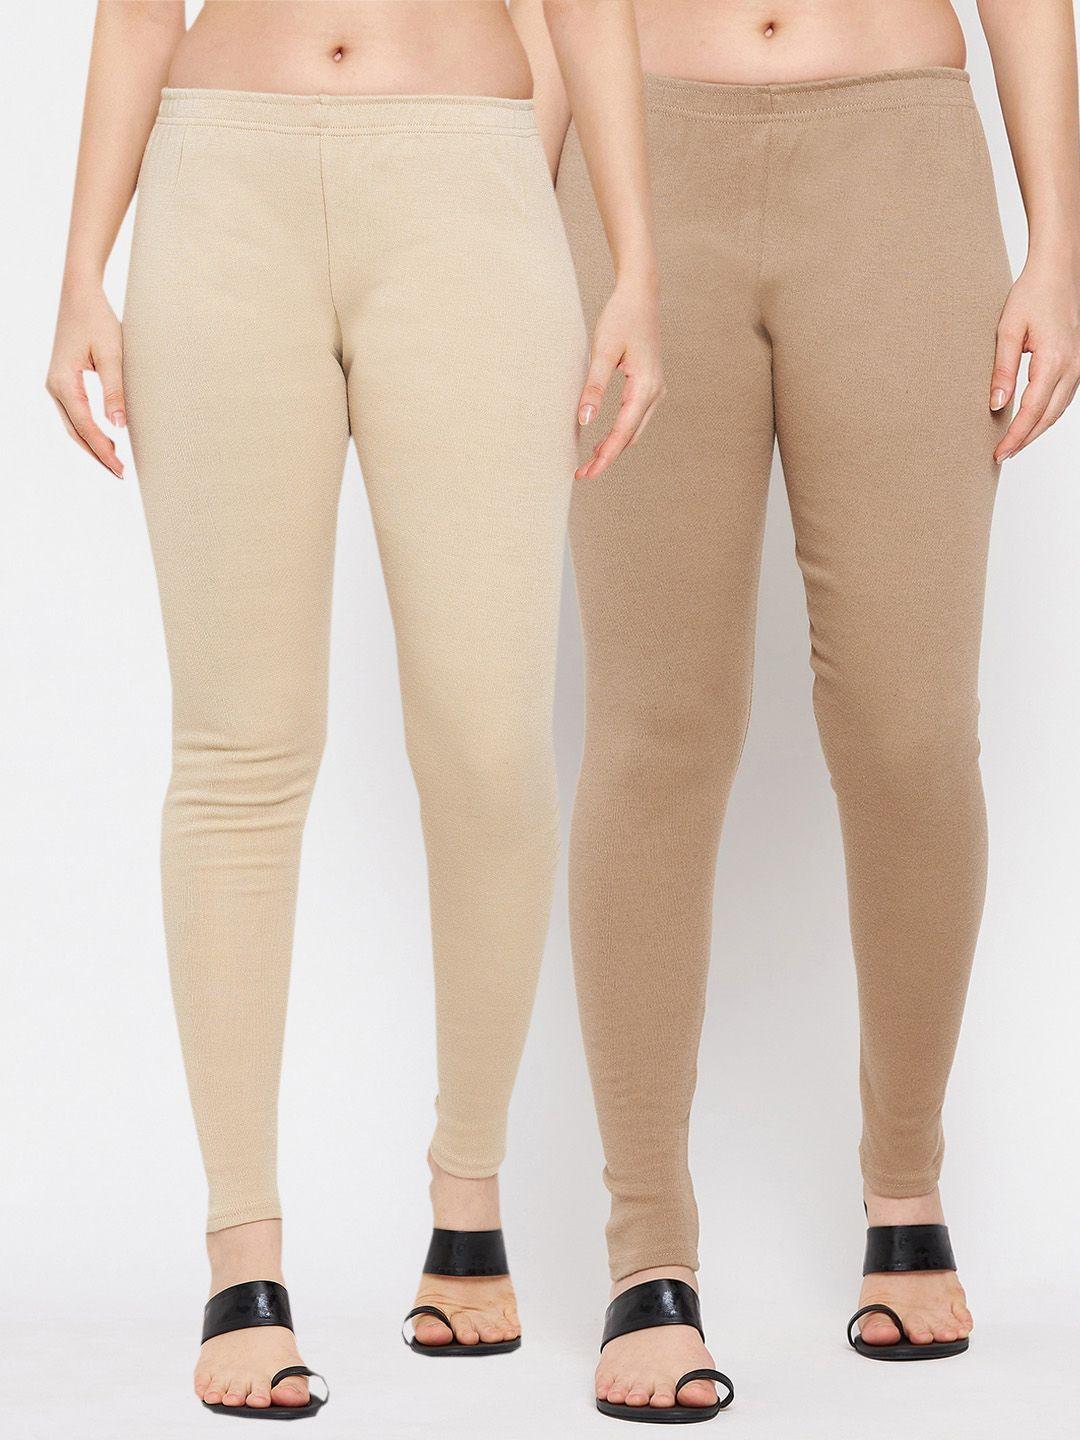 clora-creation-women-pack-of-2-nude-&-beige-solid-woolen-ankle-length-leggings